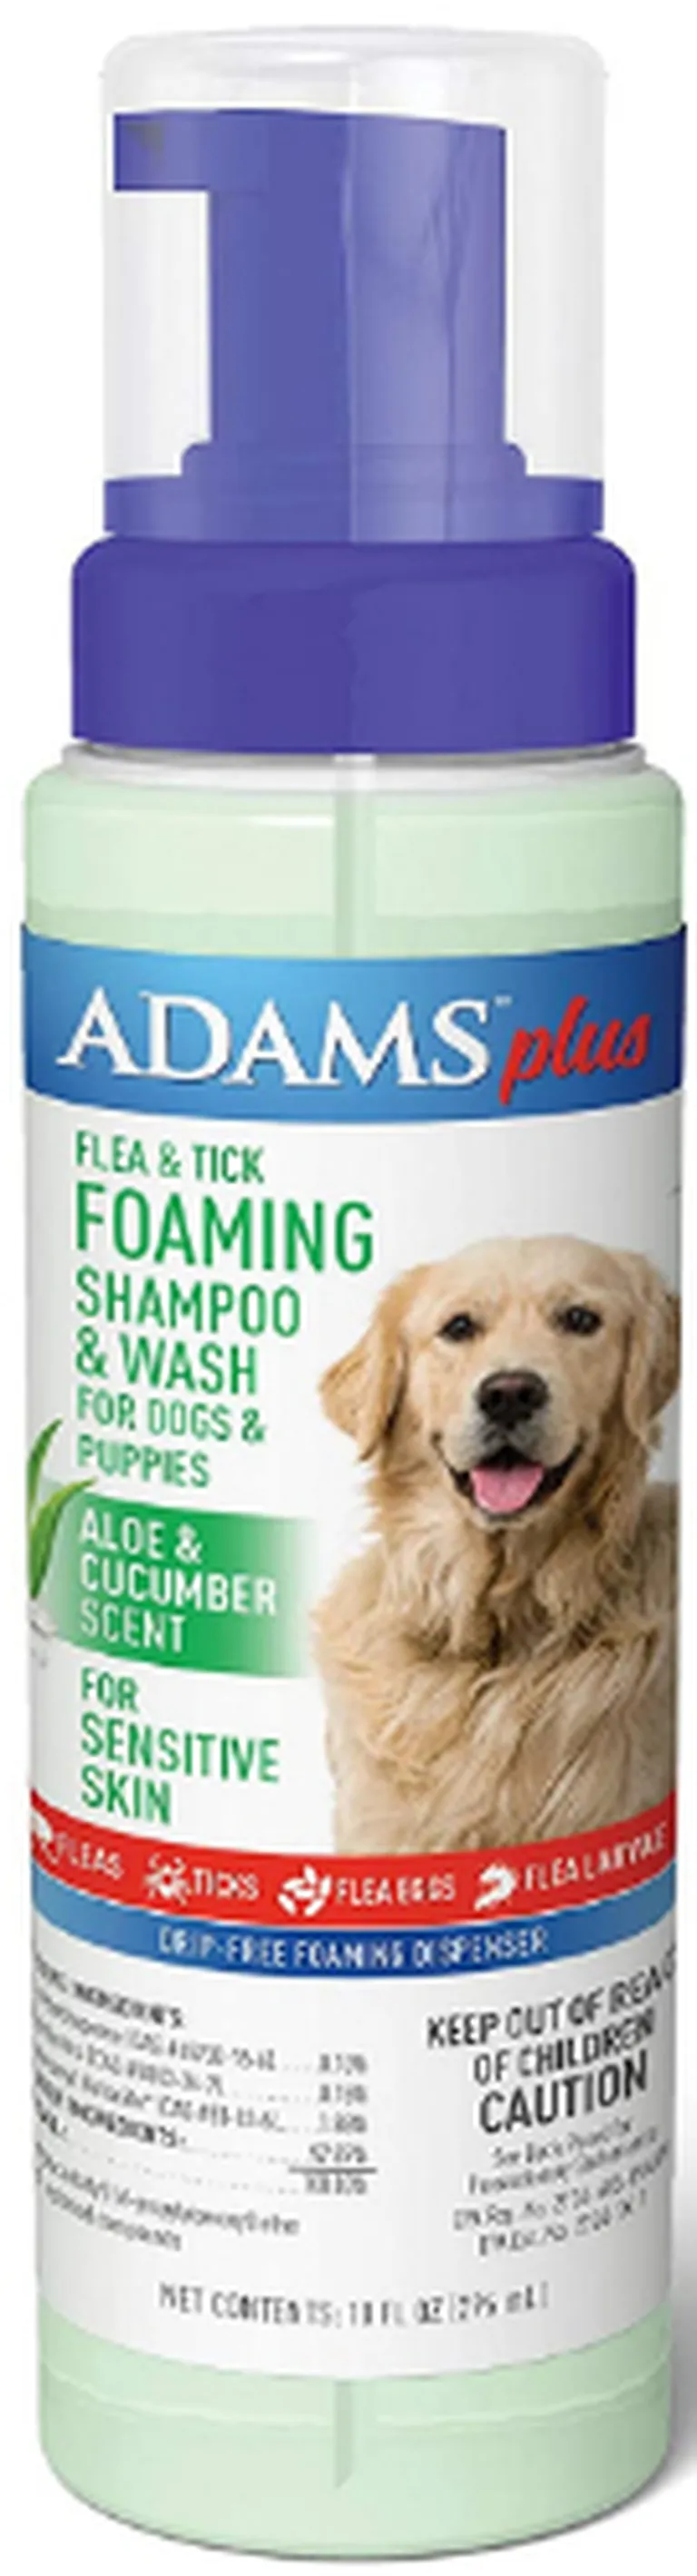 Adams Foaming Flea and Tick Shampoo with Aloe and Cucumber Photo 1